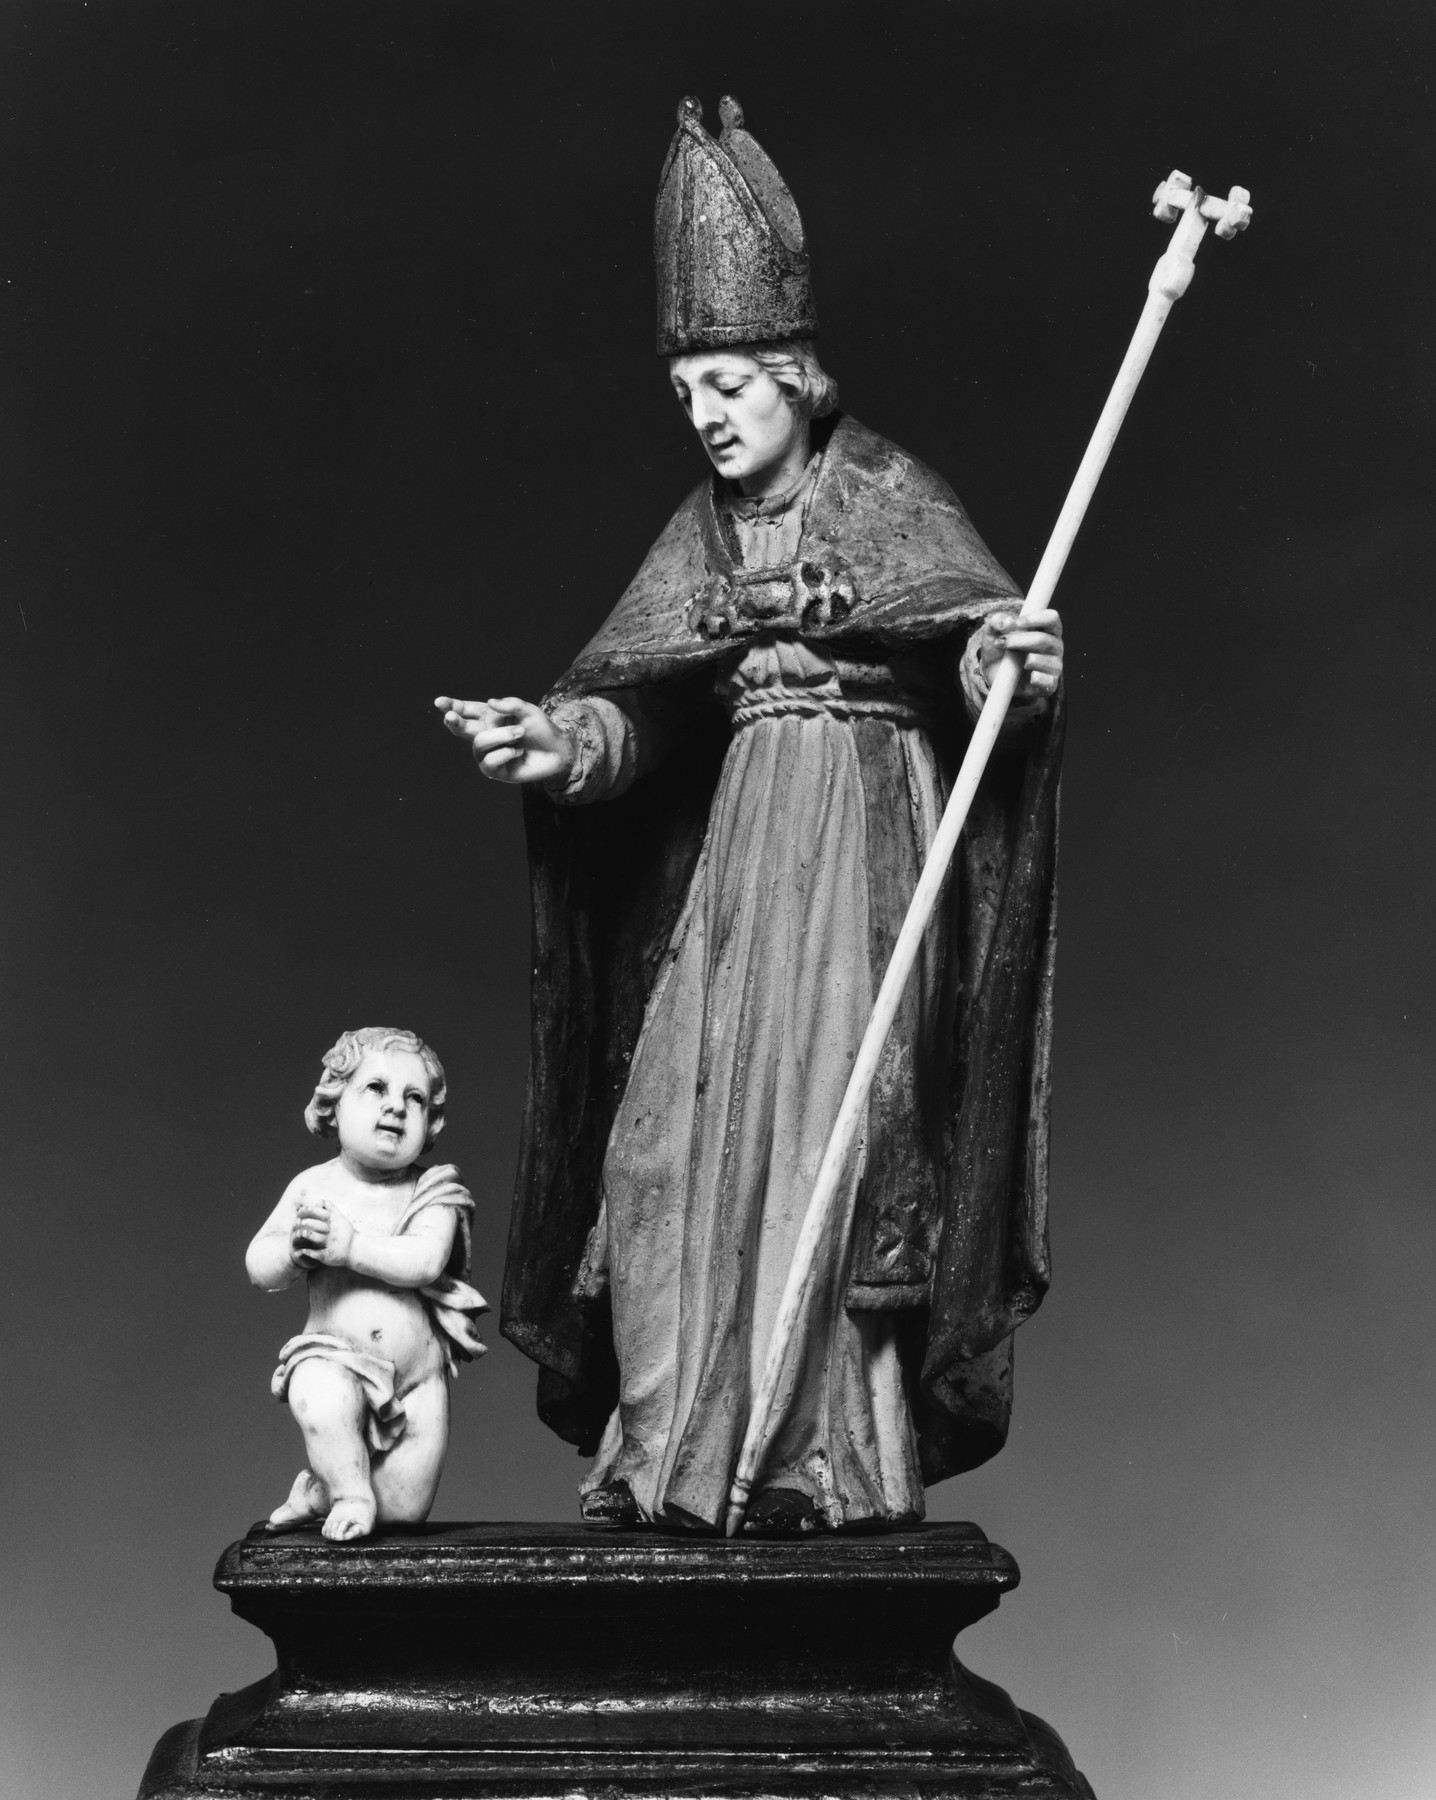 Image for Saint Nicholas of Bari